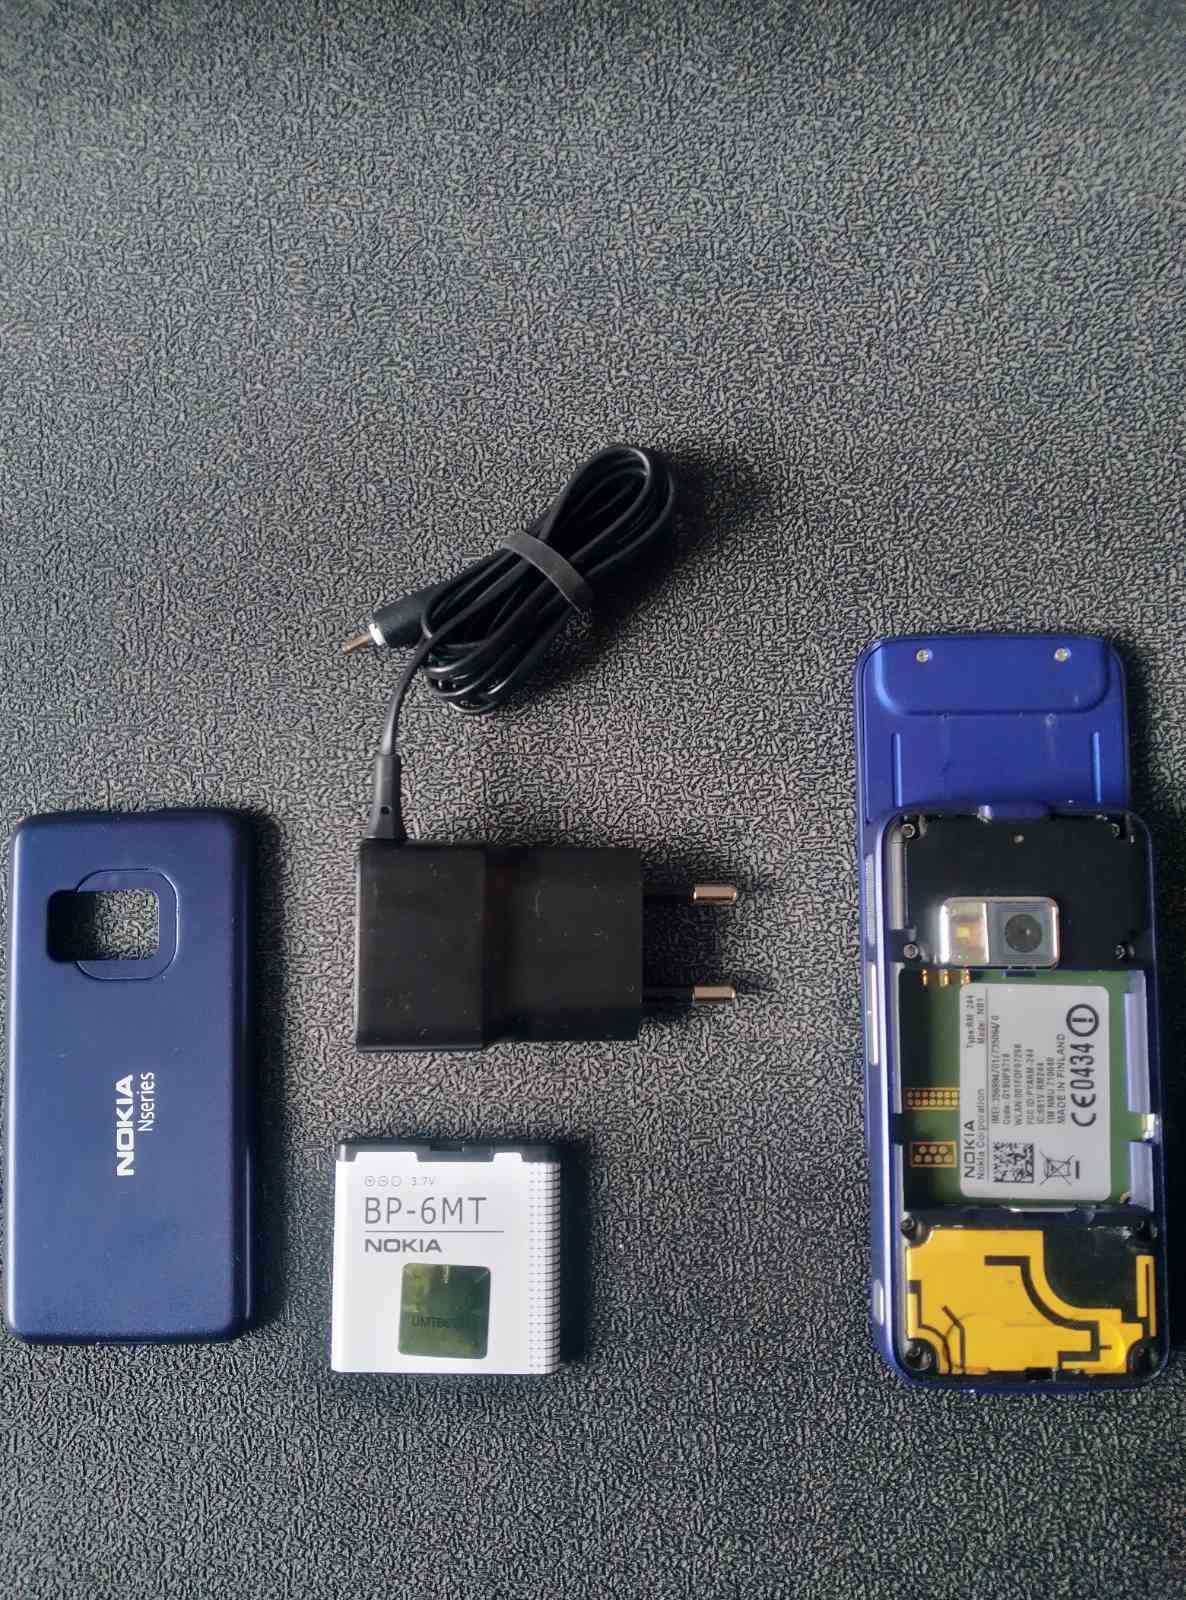 Мобилен телефон нокиа Nokia N81 3G, WIFI, GPS, Bluetooth,Symbian,слайд